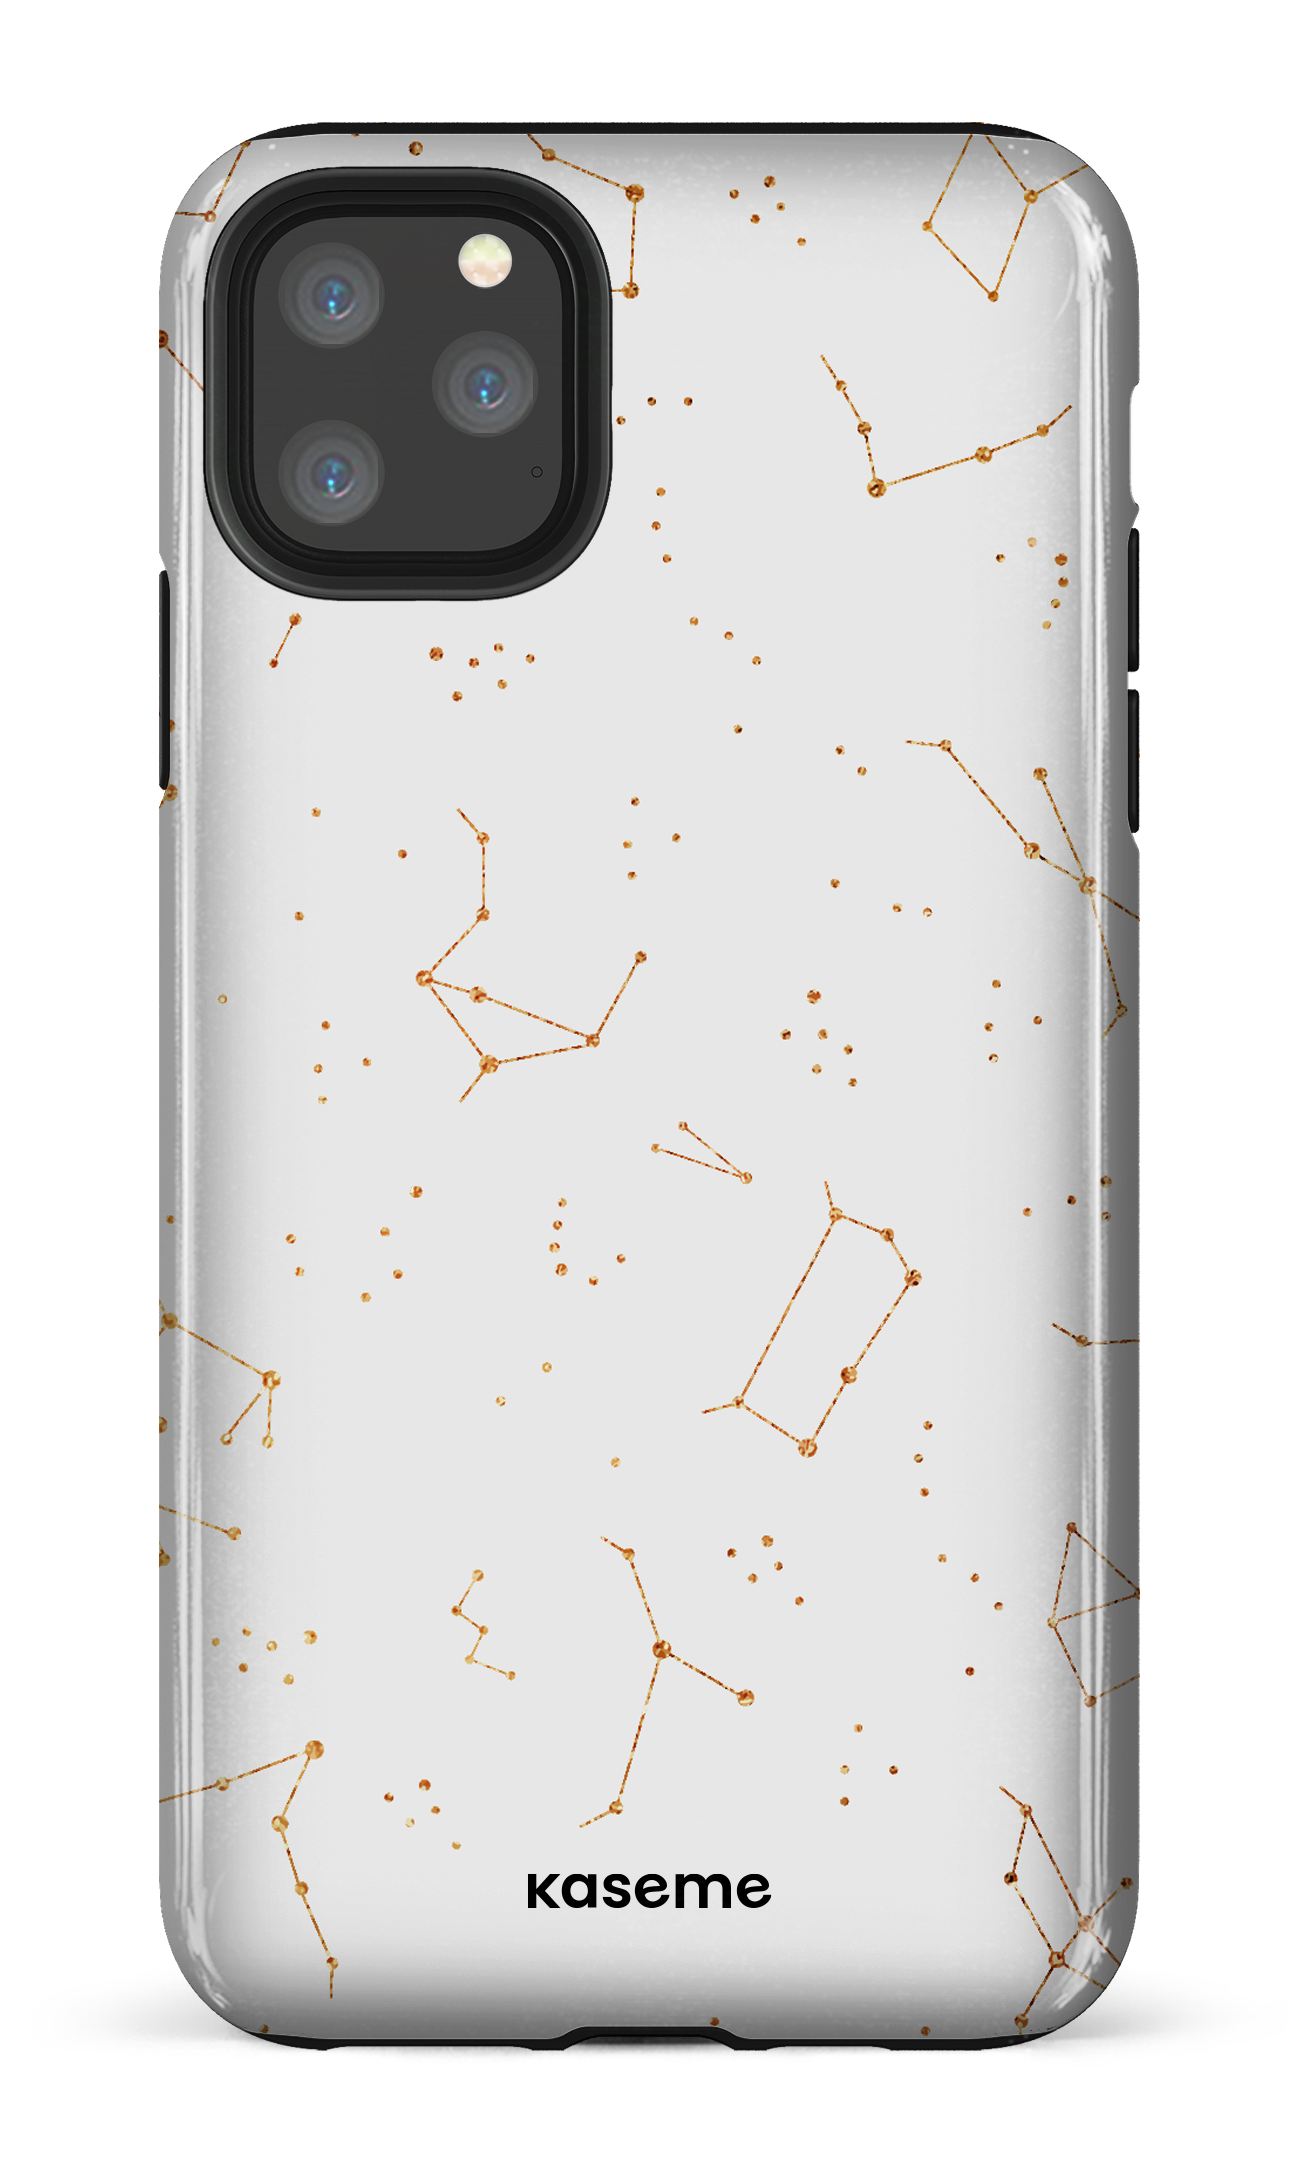 Stardust sky - iPhone 11 Pro Max